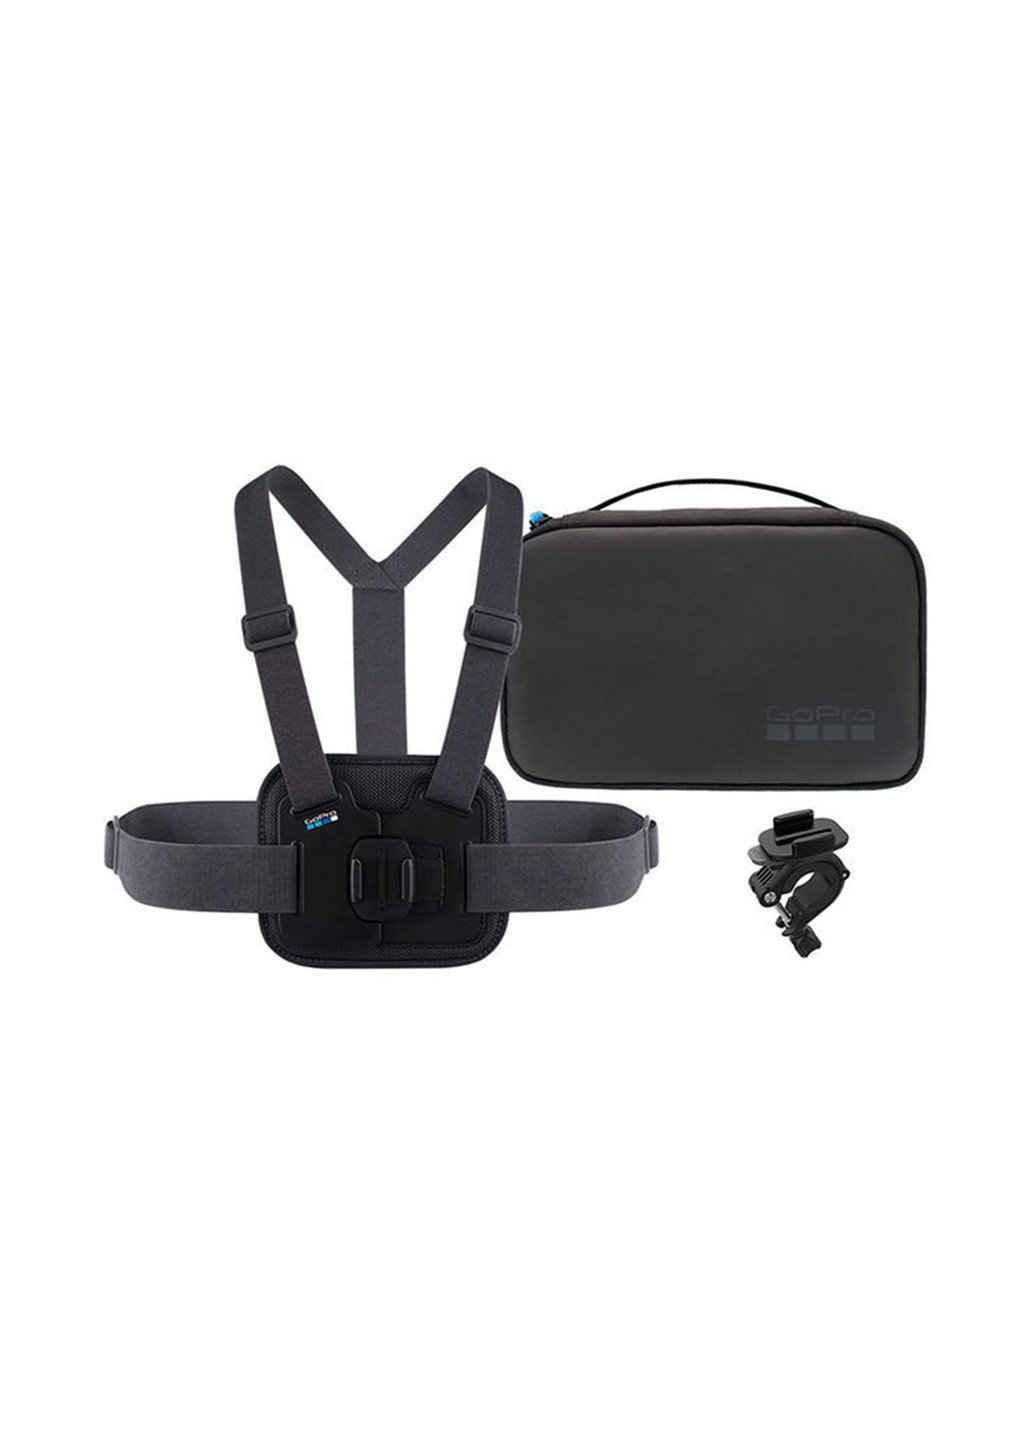 Комплект держателей для экшн-камеры Sports Kit (AKTAC-001) GOPRO держателей для экшн-камеры sports kit (aktac-001) (141278833)